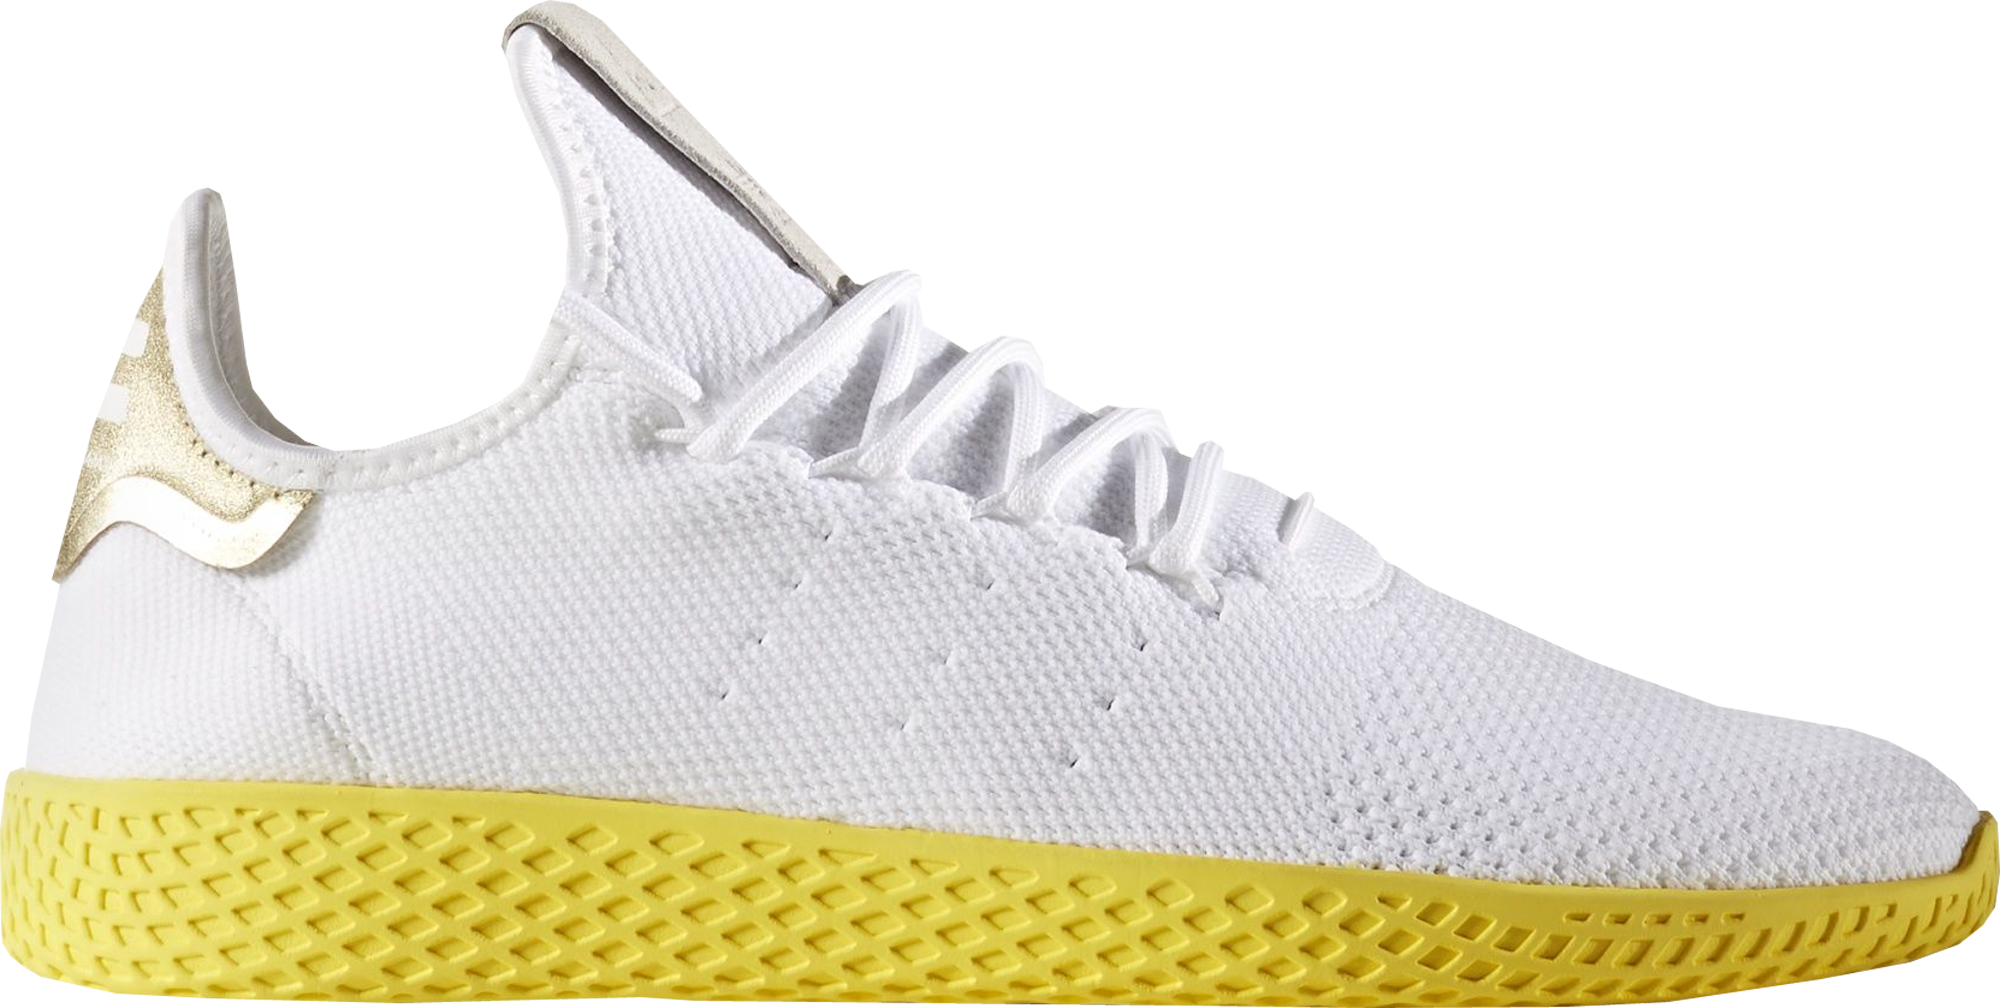 Adidas Pharrell Williams HU Kids Size 6.5 Youth Yellow White Tennis Shoes  ap9965